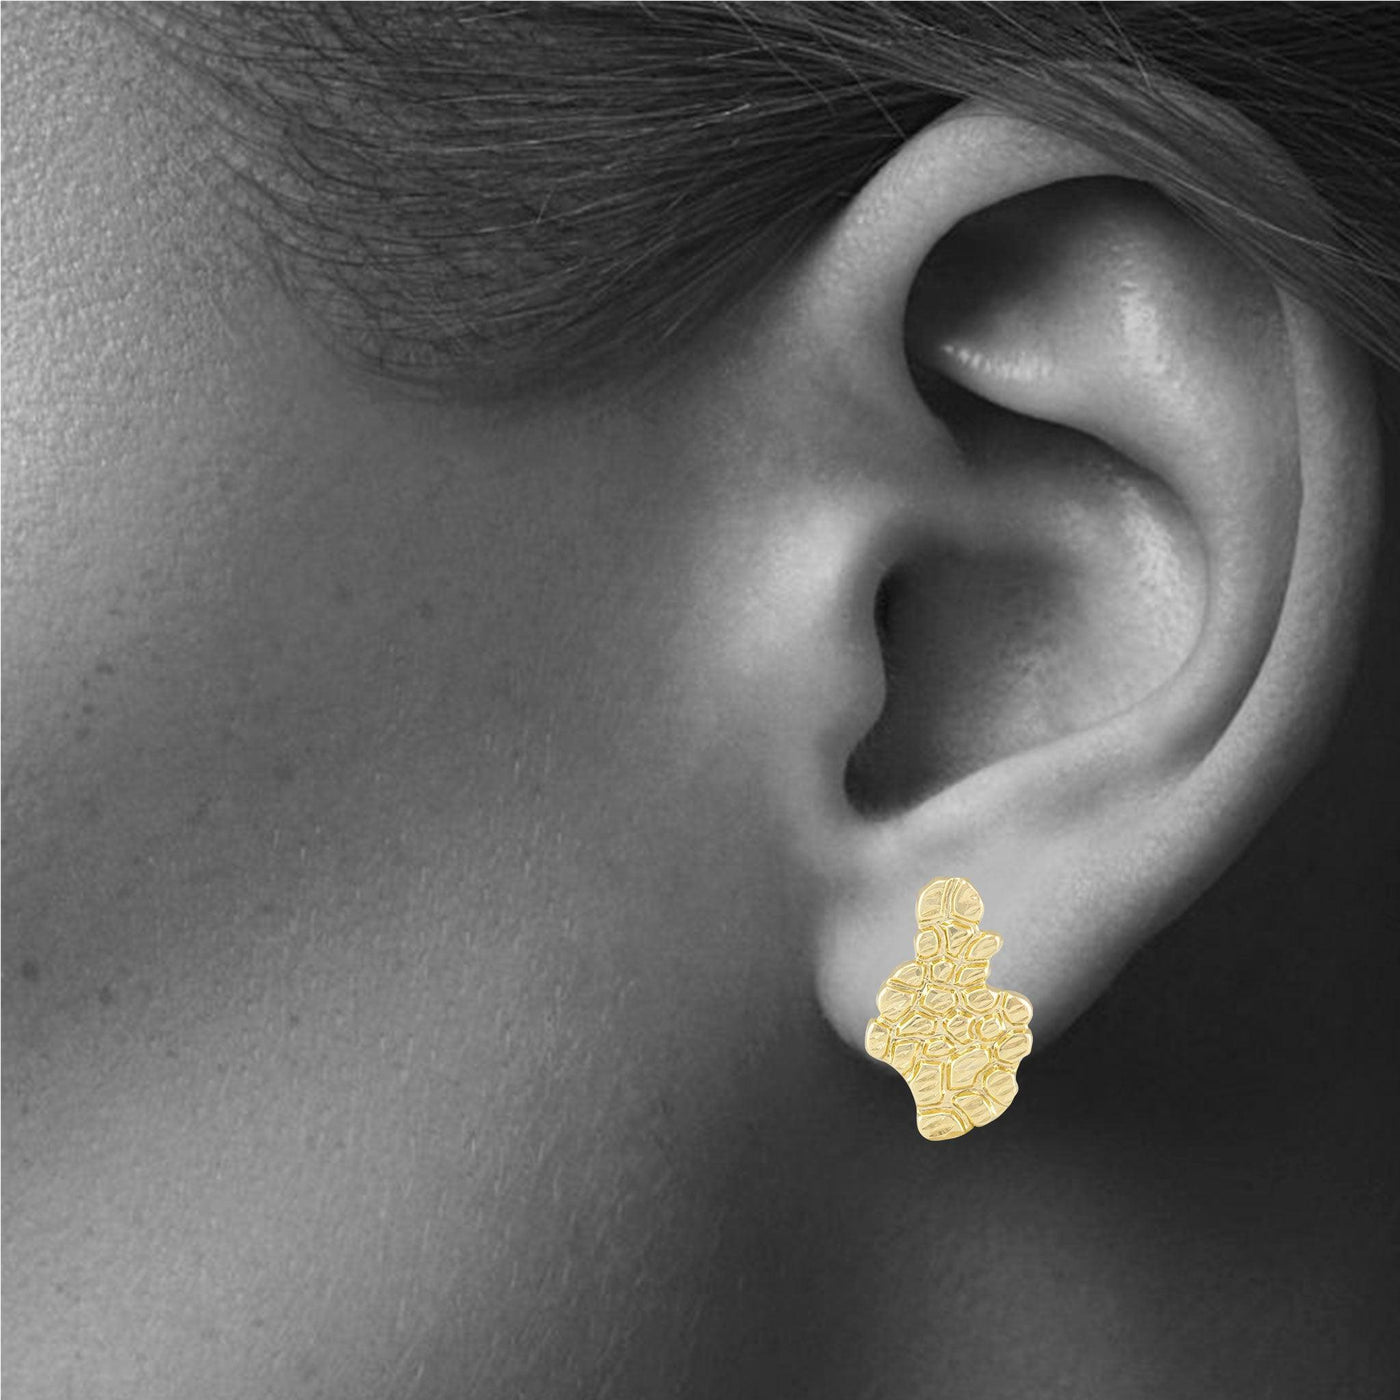 1" Large Nugget Stud Earrings 10K Yellow Gold - bayamjewelry